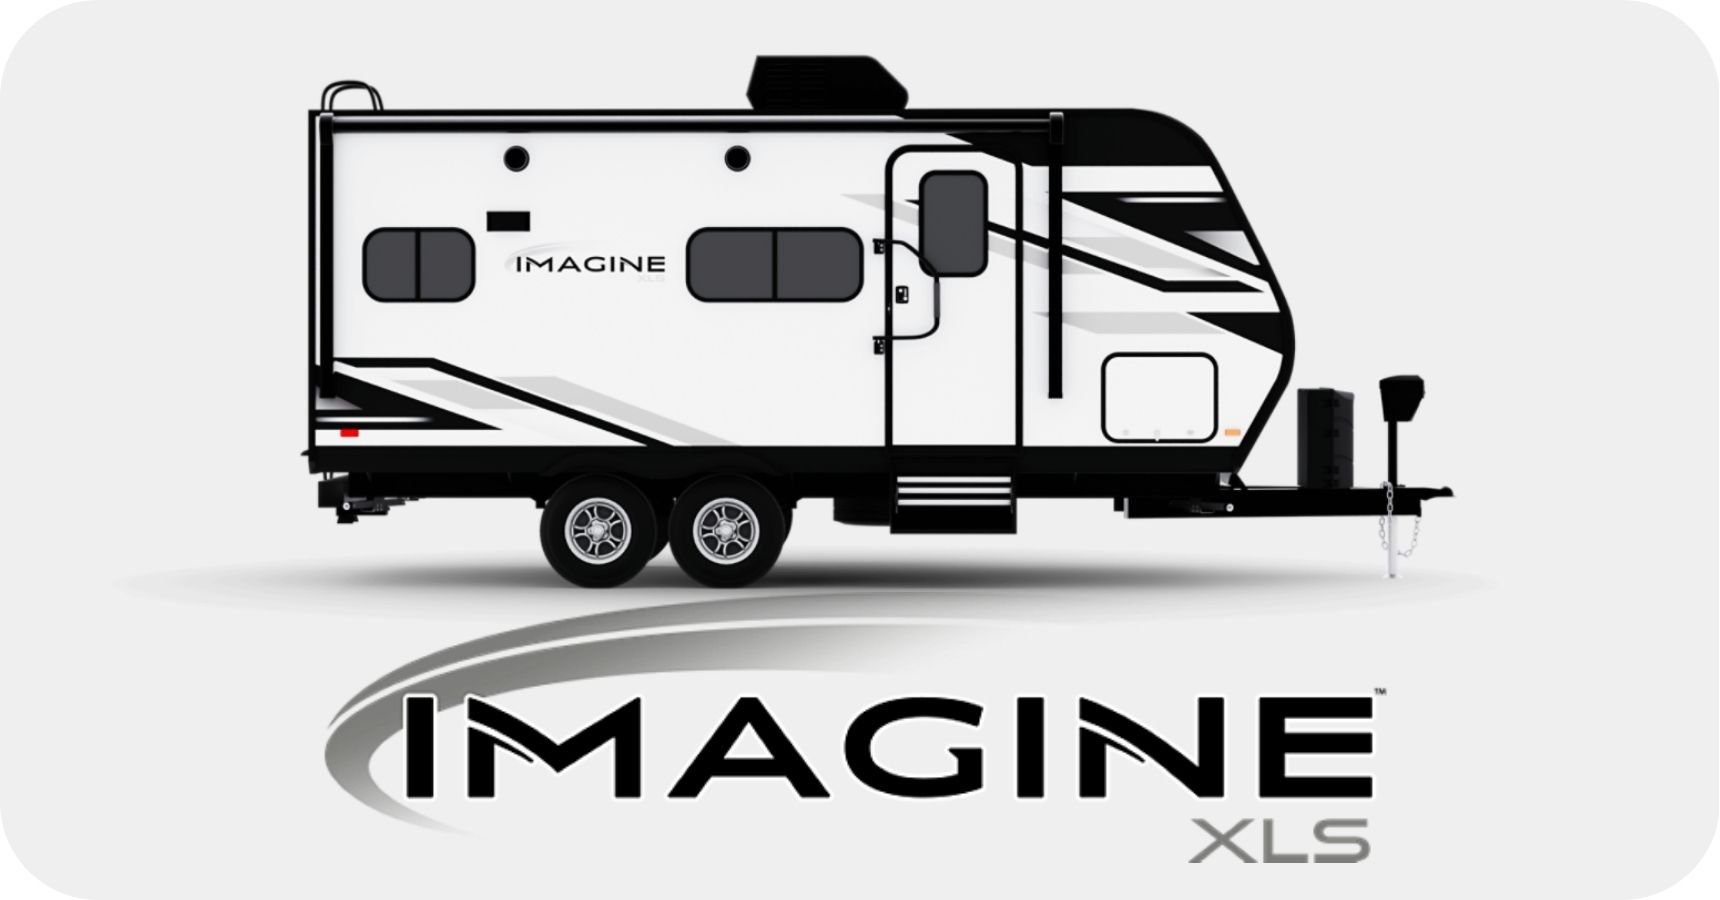 Grand Design Imagine XLS